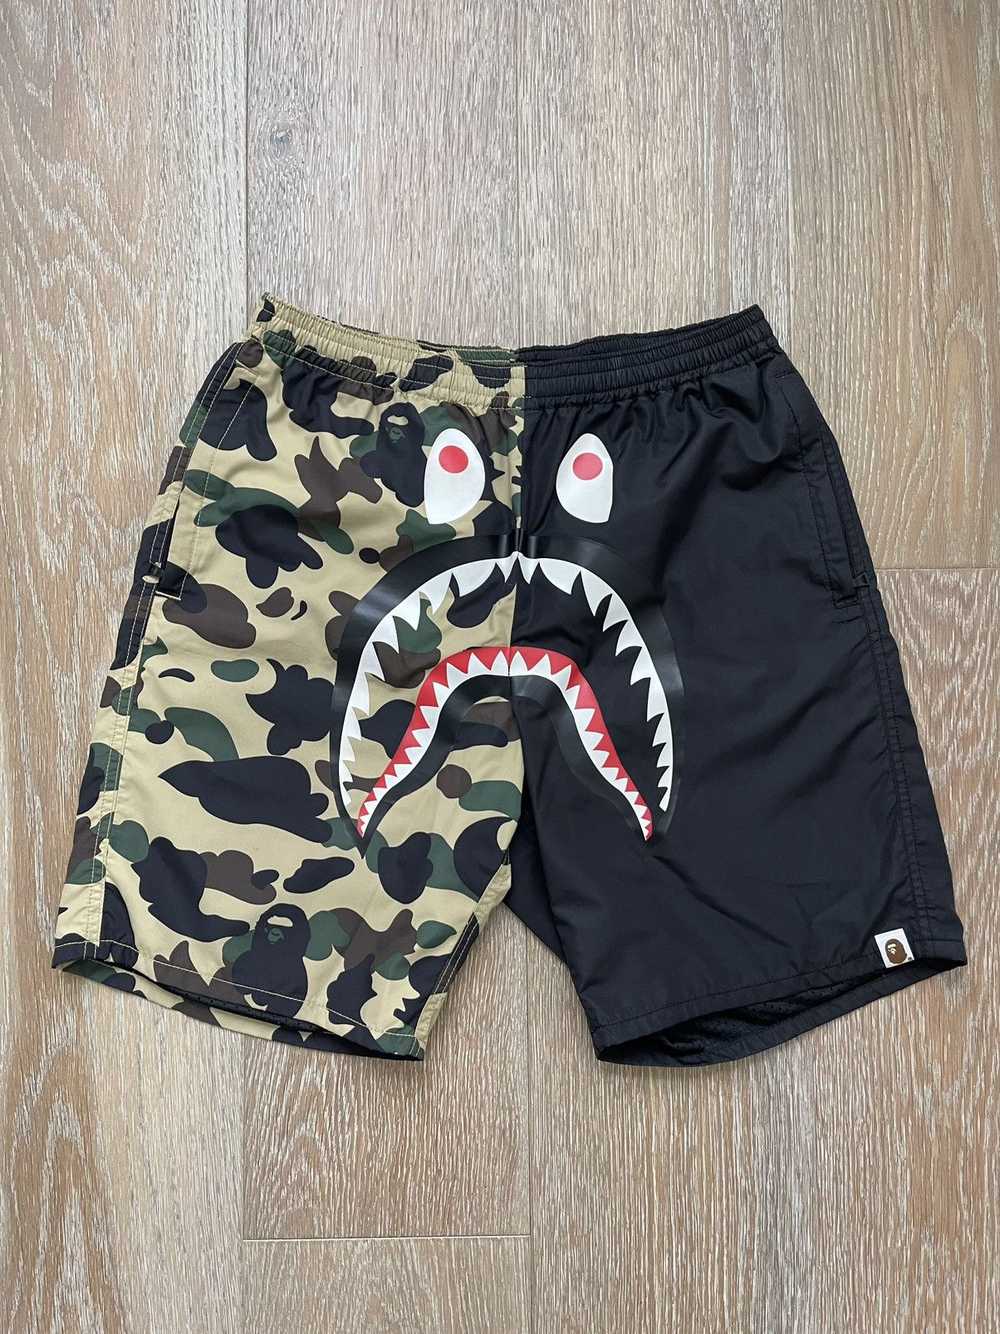 Bape 1st Camo Shark Beach Shorts - image 1